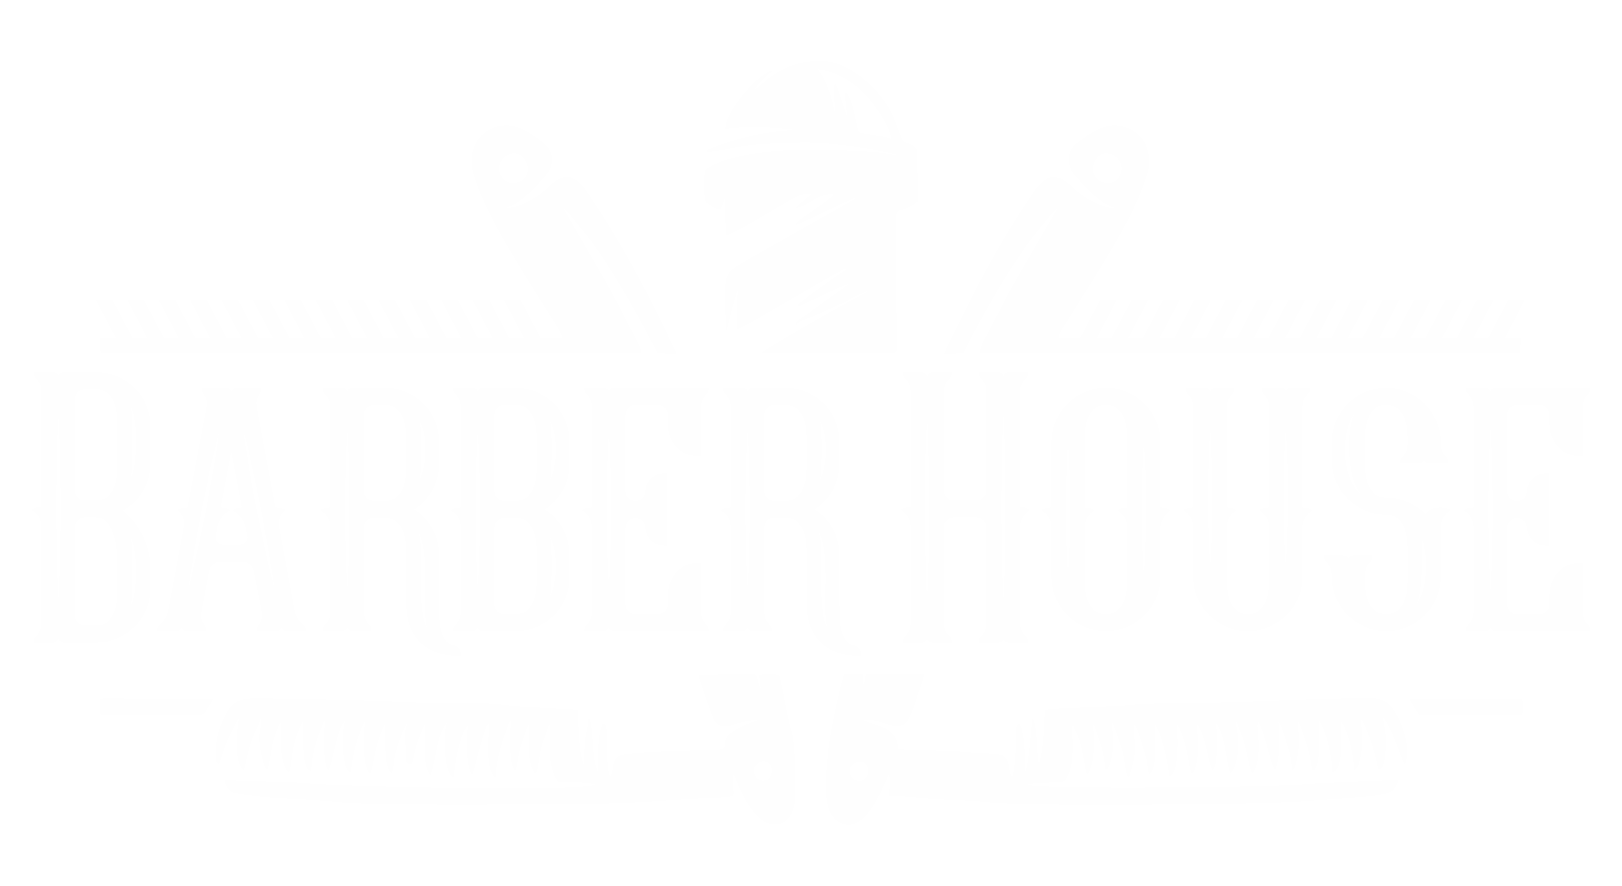 Barber House